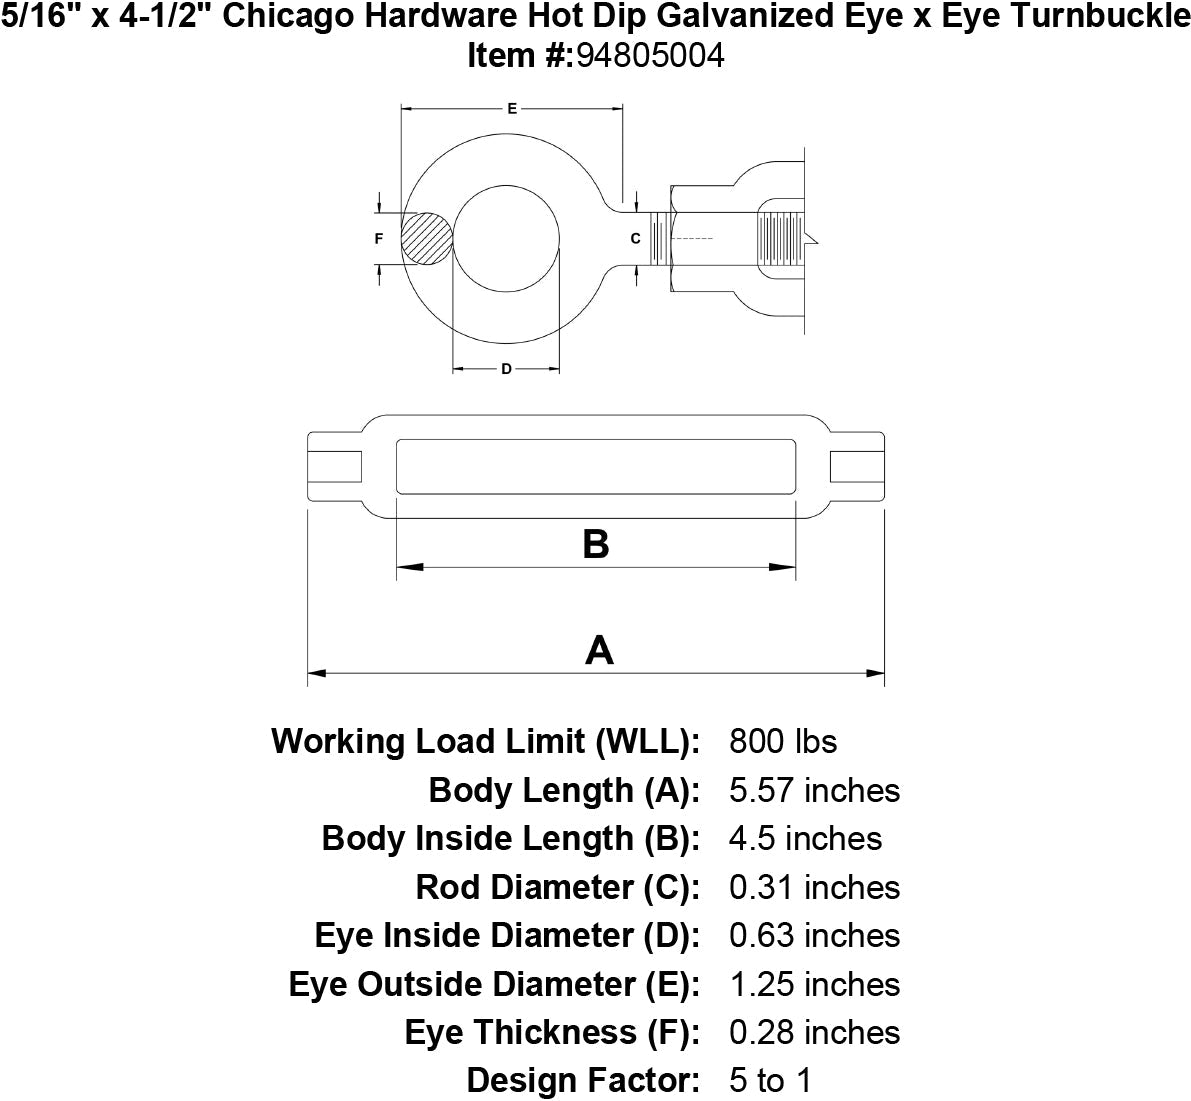 Chicago Hardware Hot Dip Galvanized Eye x Eye Turnbuckles